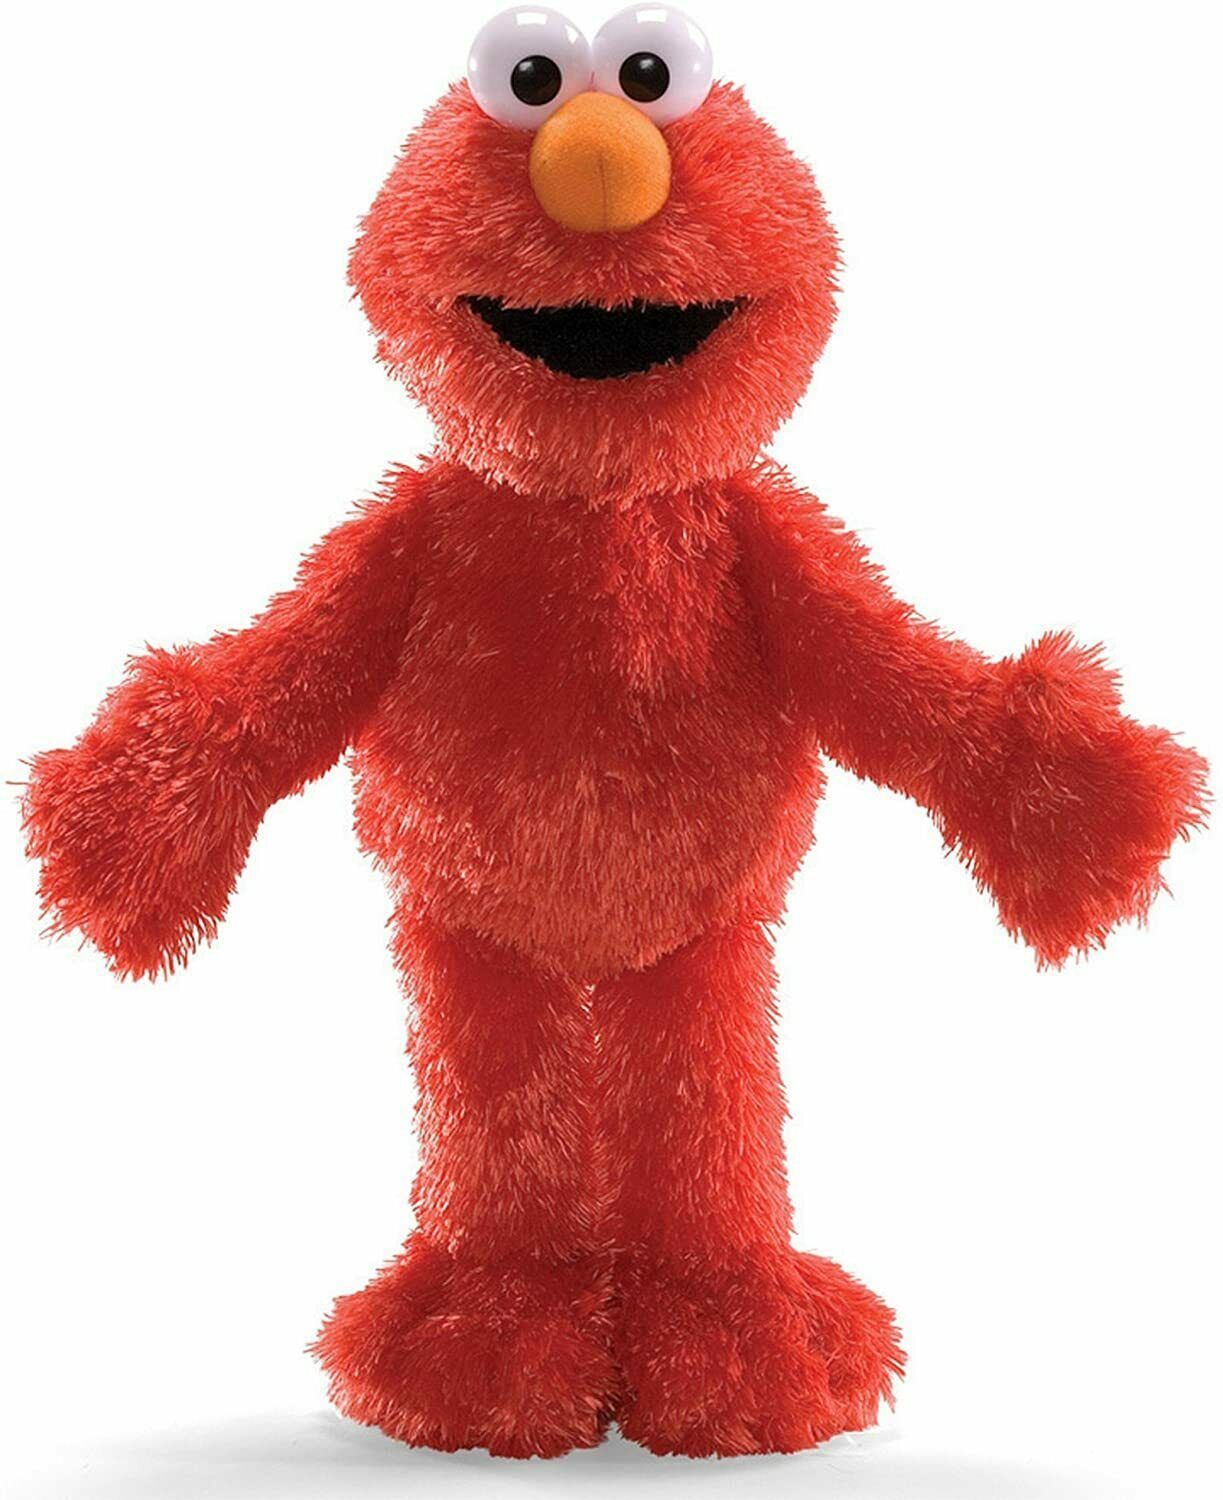 Gund Children's Sesame Street Elmo 13 Plush Toy, NwT